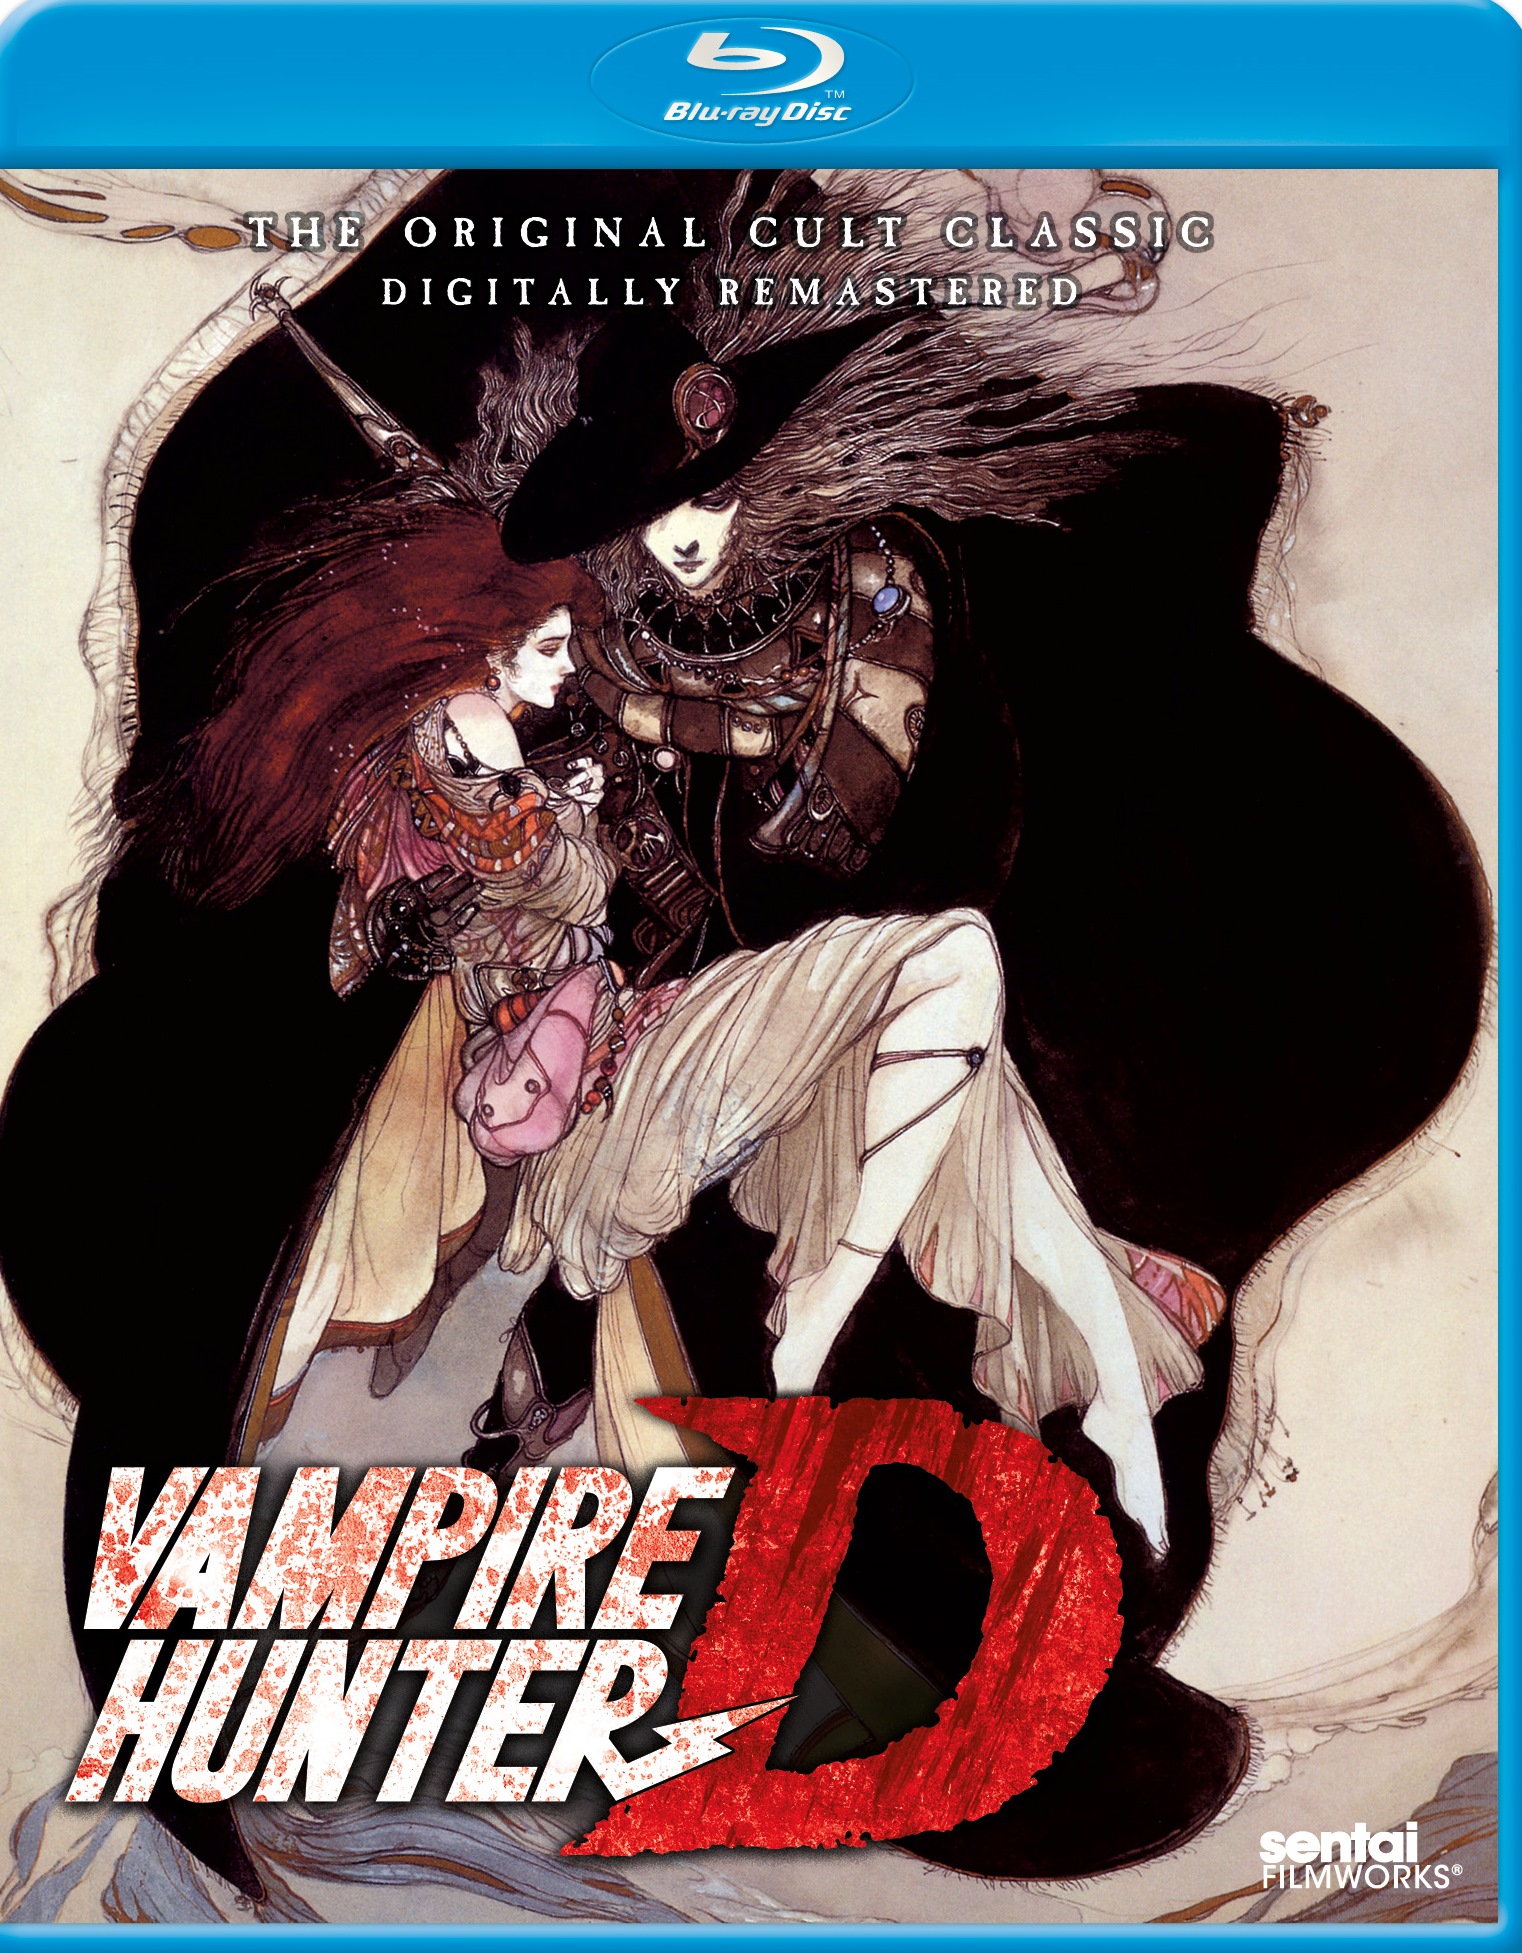 Old School Anime Review - Vampire Hunter D: Bloodlust